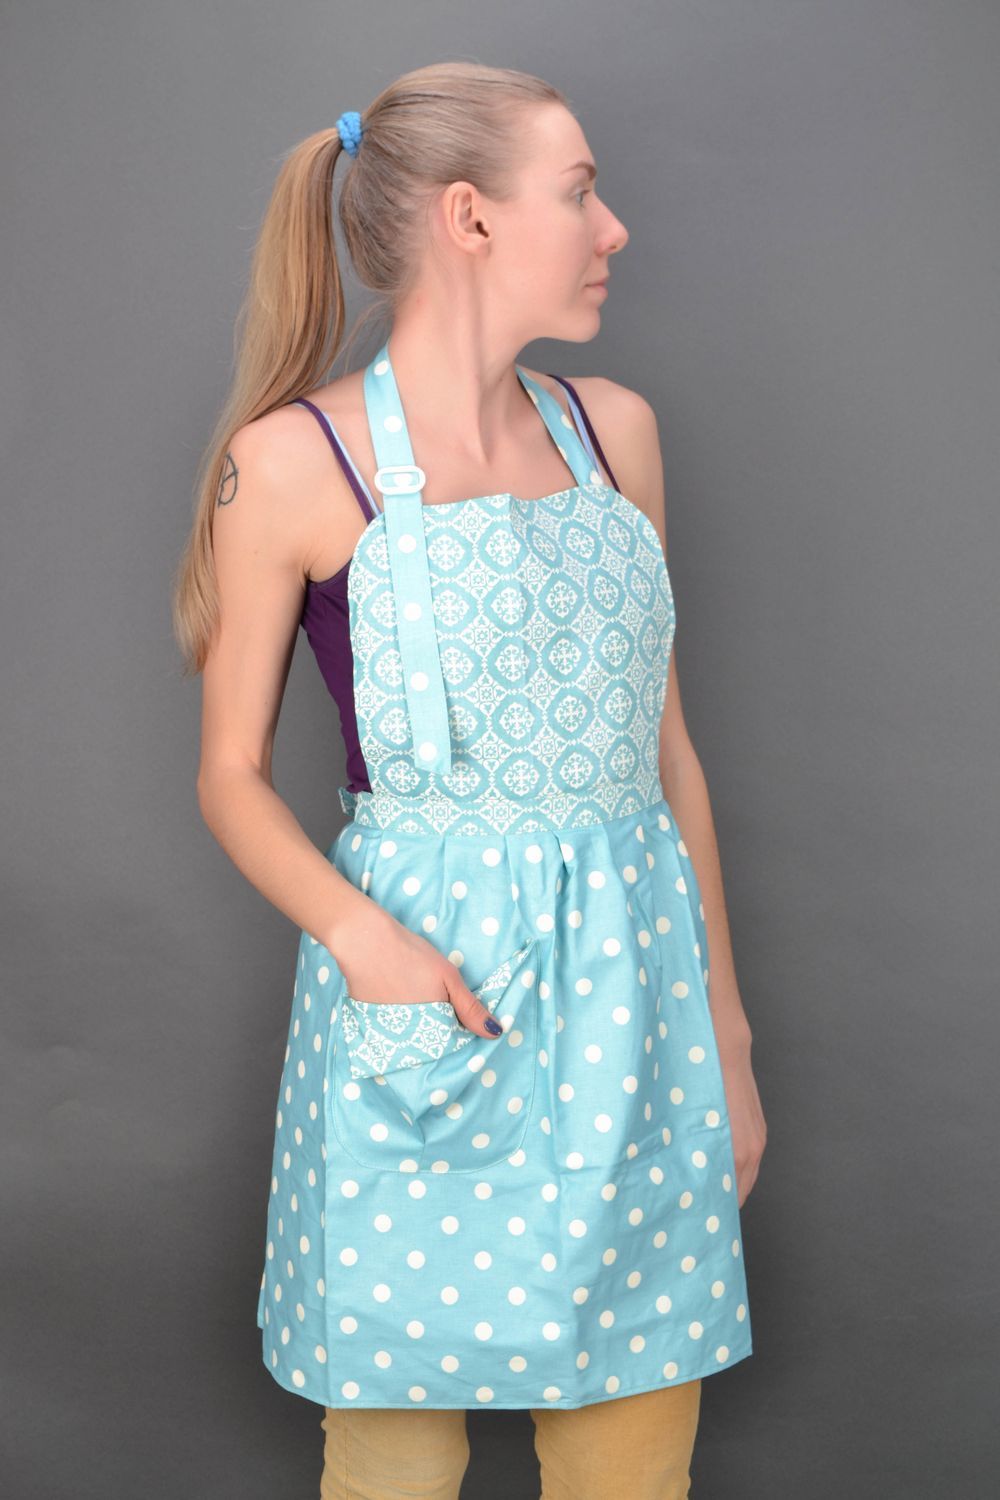 Fabric polka dot kitchen apron photo 1